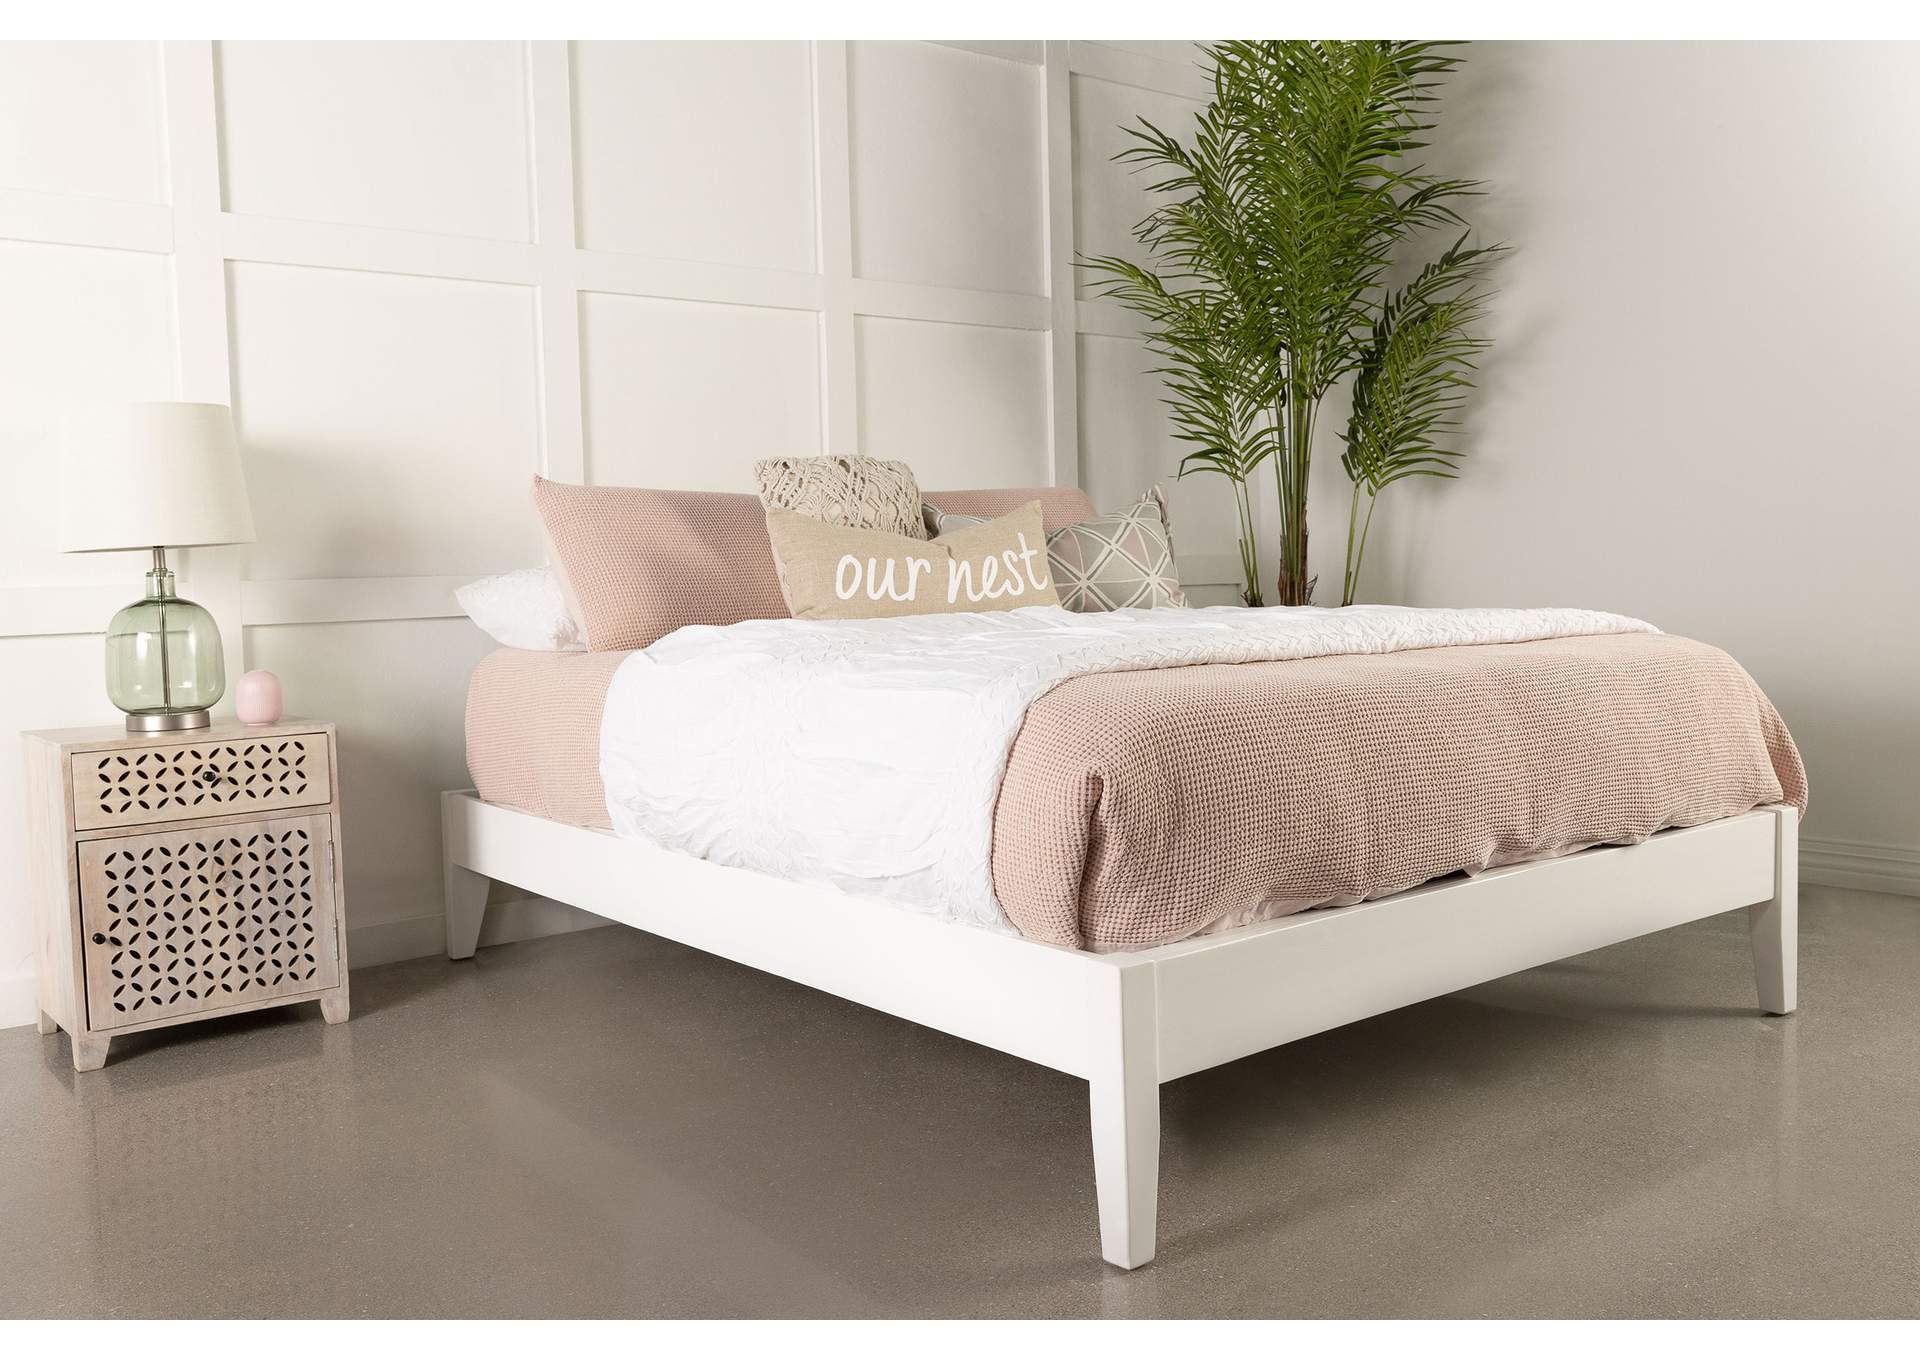 Hounslow Platform California King Bed White,Coaster Furniture